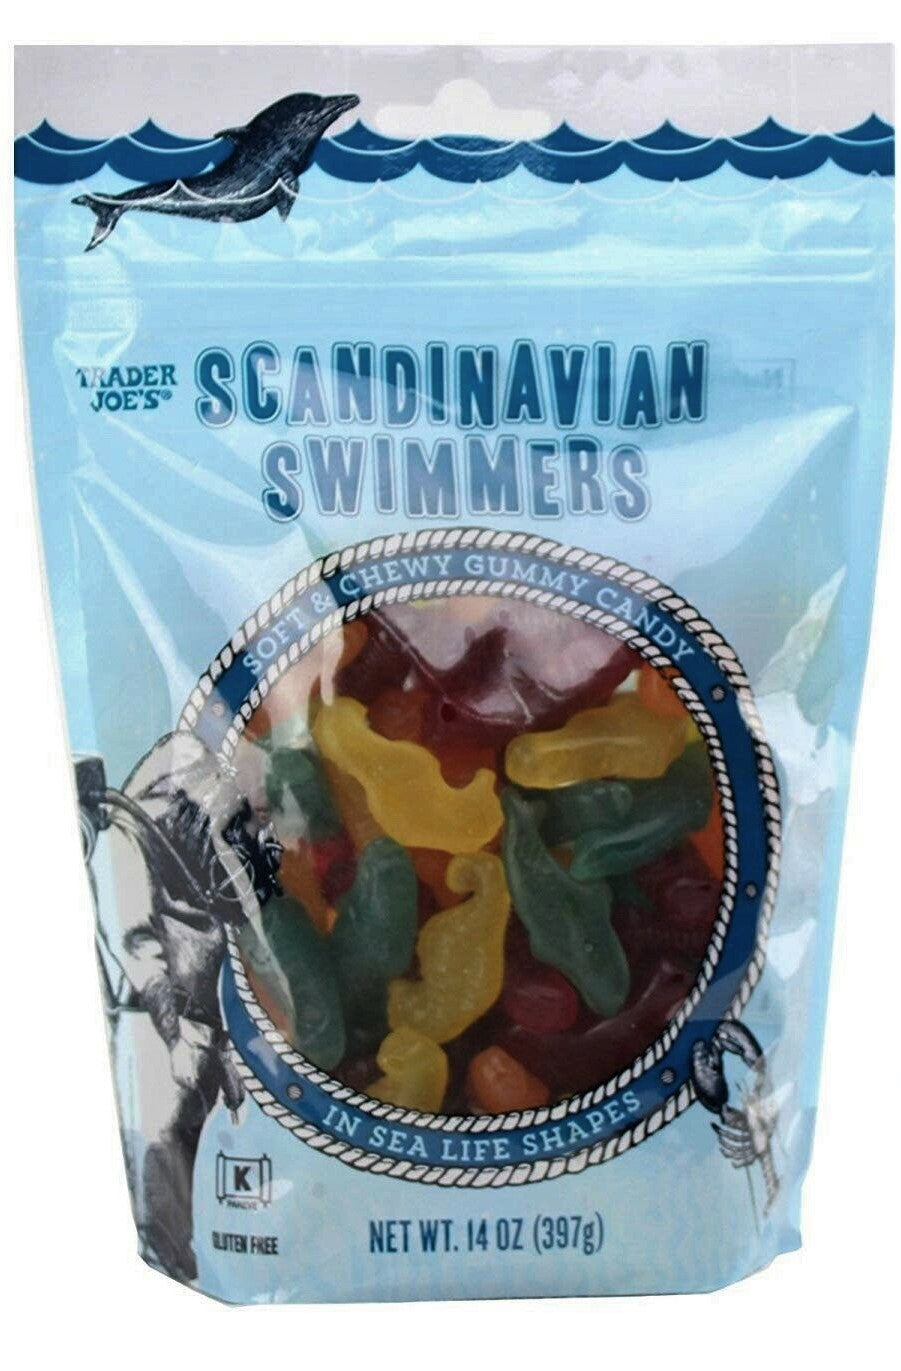 Candy Trader Joe's Scandinavian Swimmers